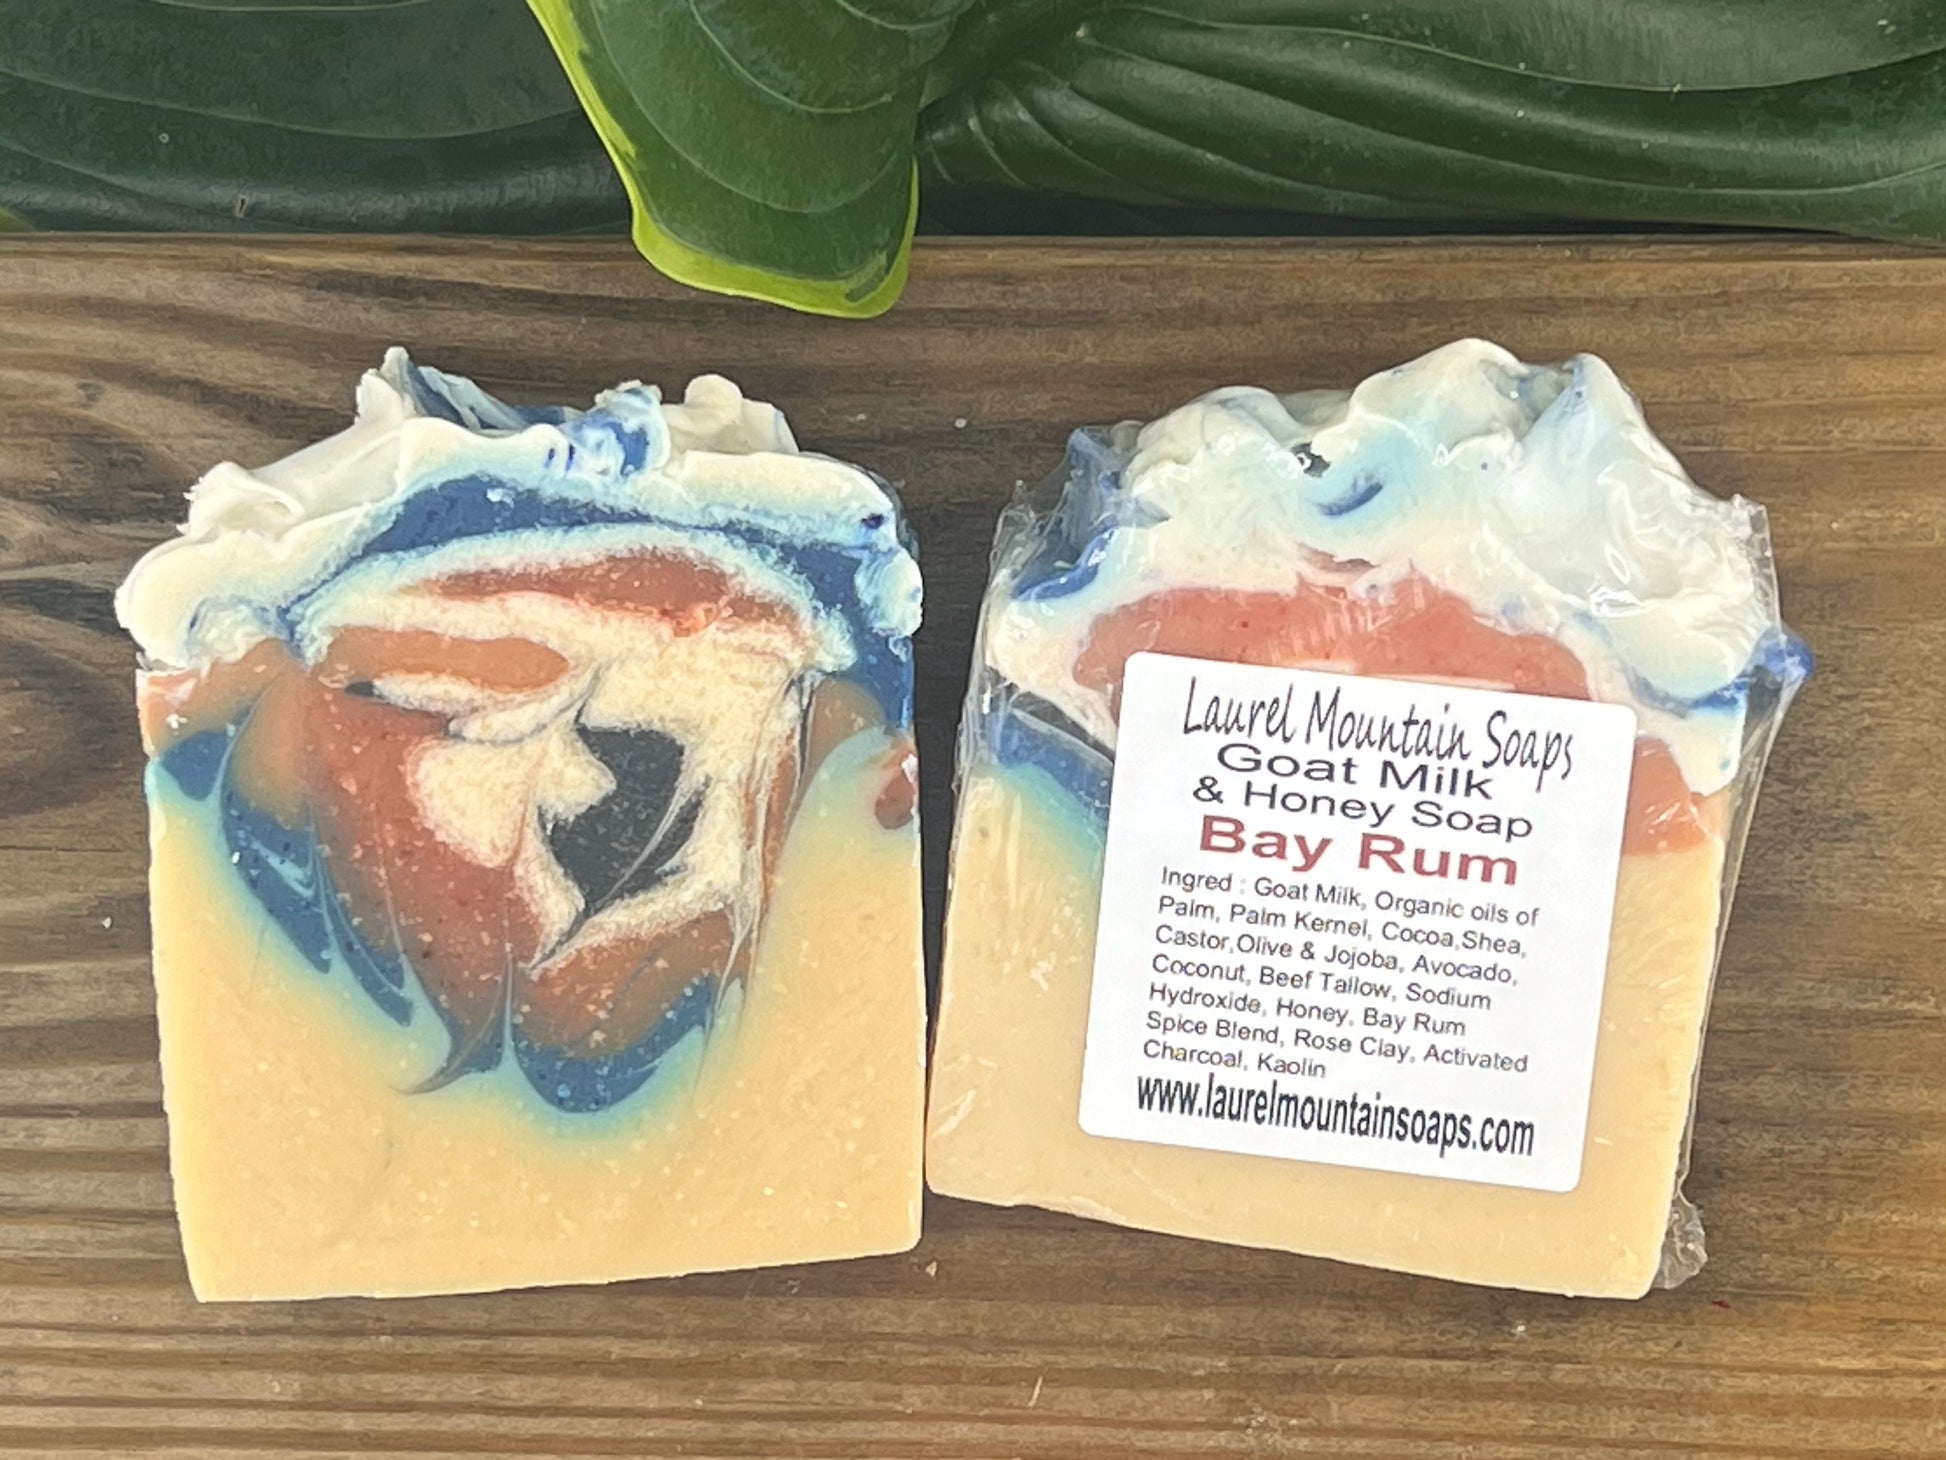 Bay Rum palm free soap - Men's favourite